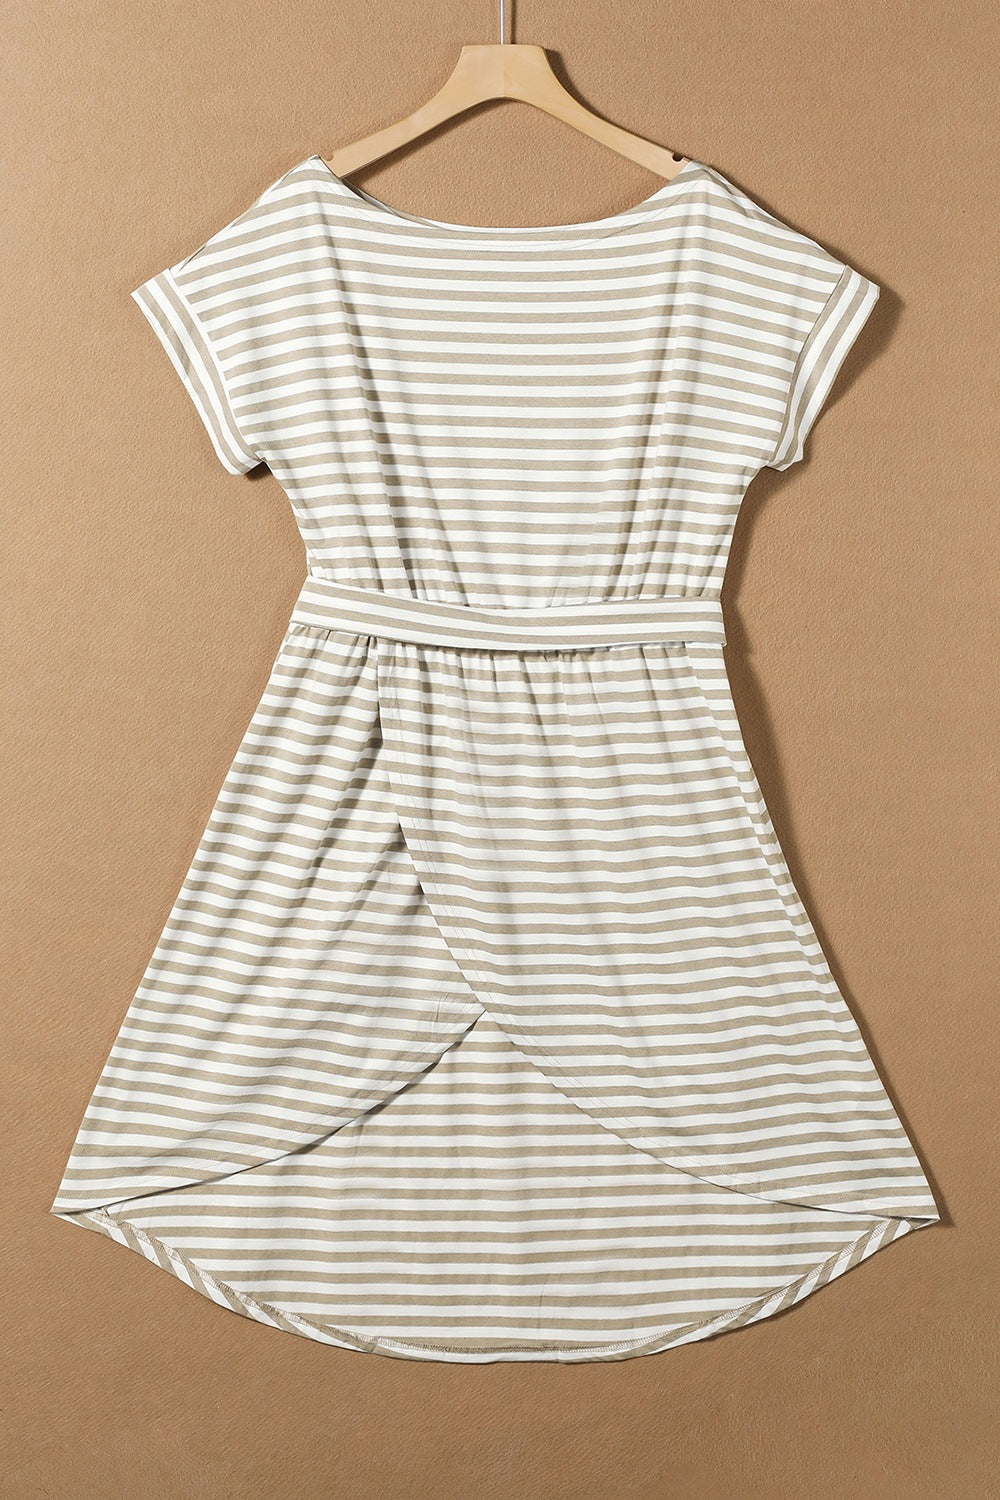 TEEK - Tied Striped Cap Sleeve Dress DRESS TEEK Trend S  